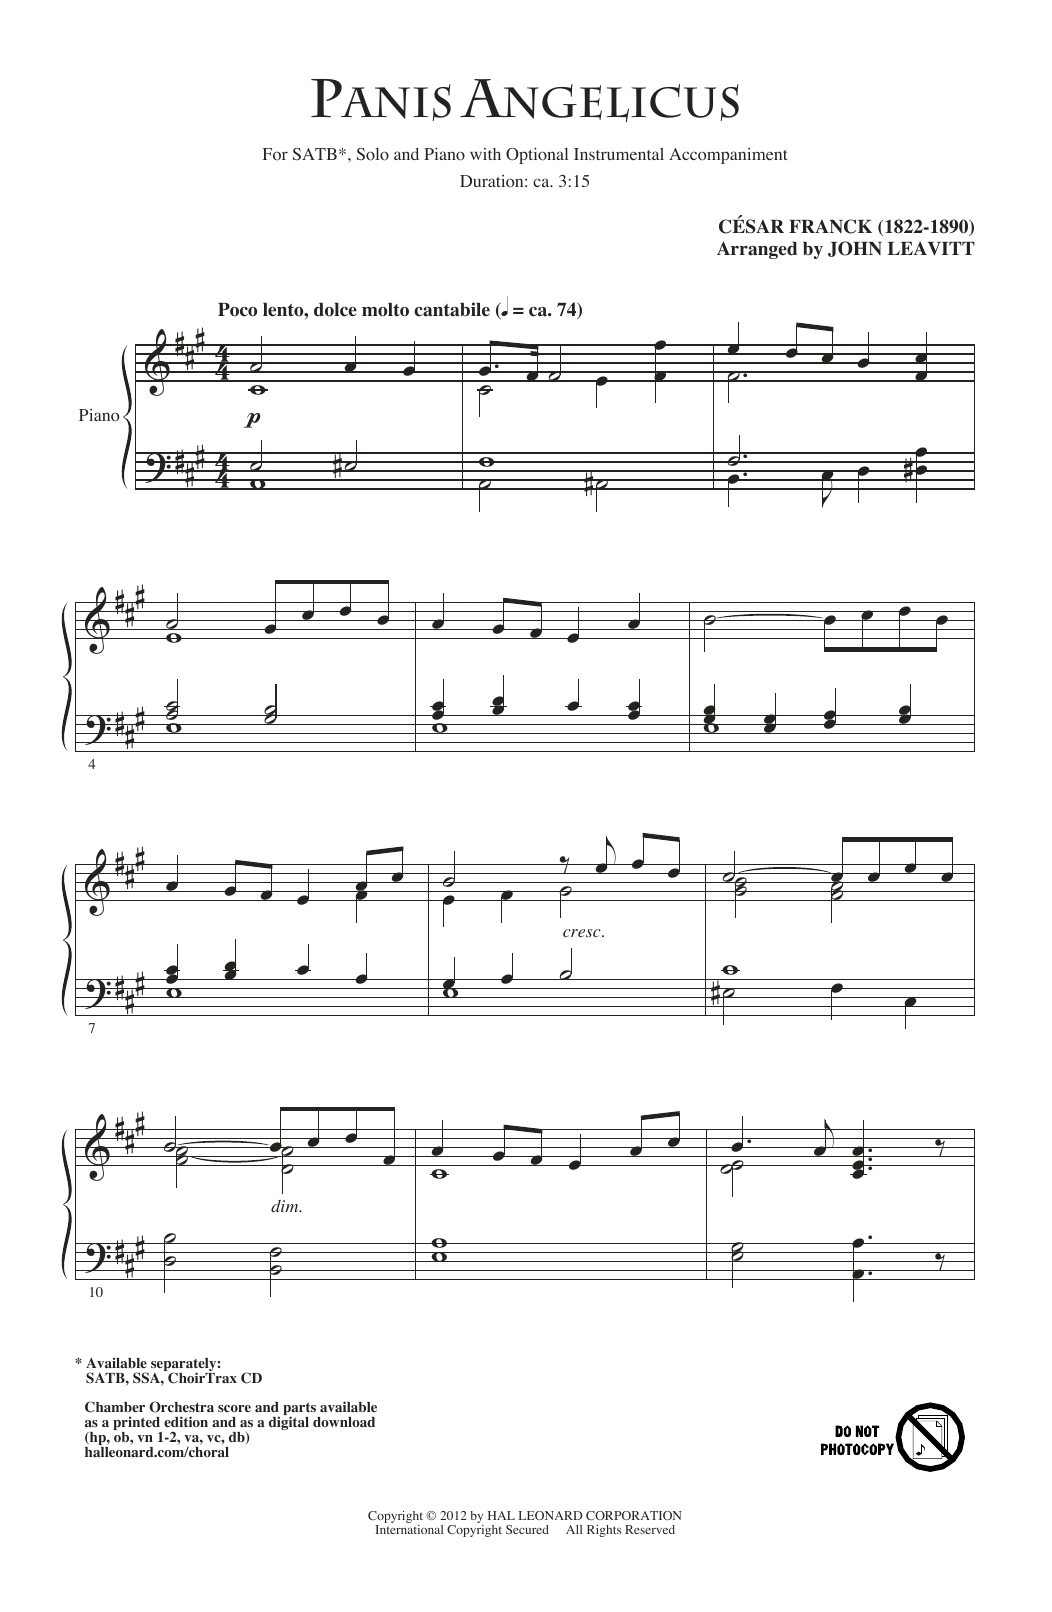 Cesar Franck Panis Angelicus (arr. John Leavitt) Sheet Music Notes & Chords for SSA Choir - Download or Print PDF